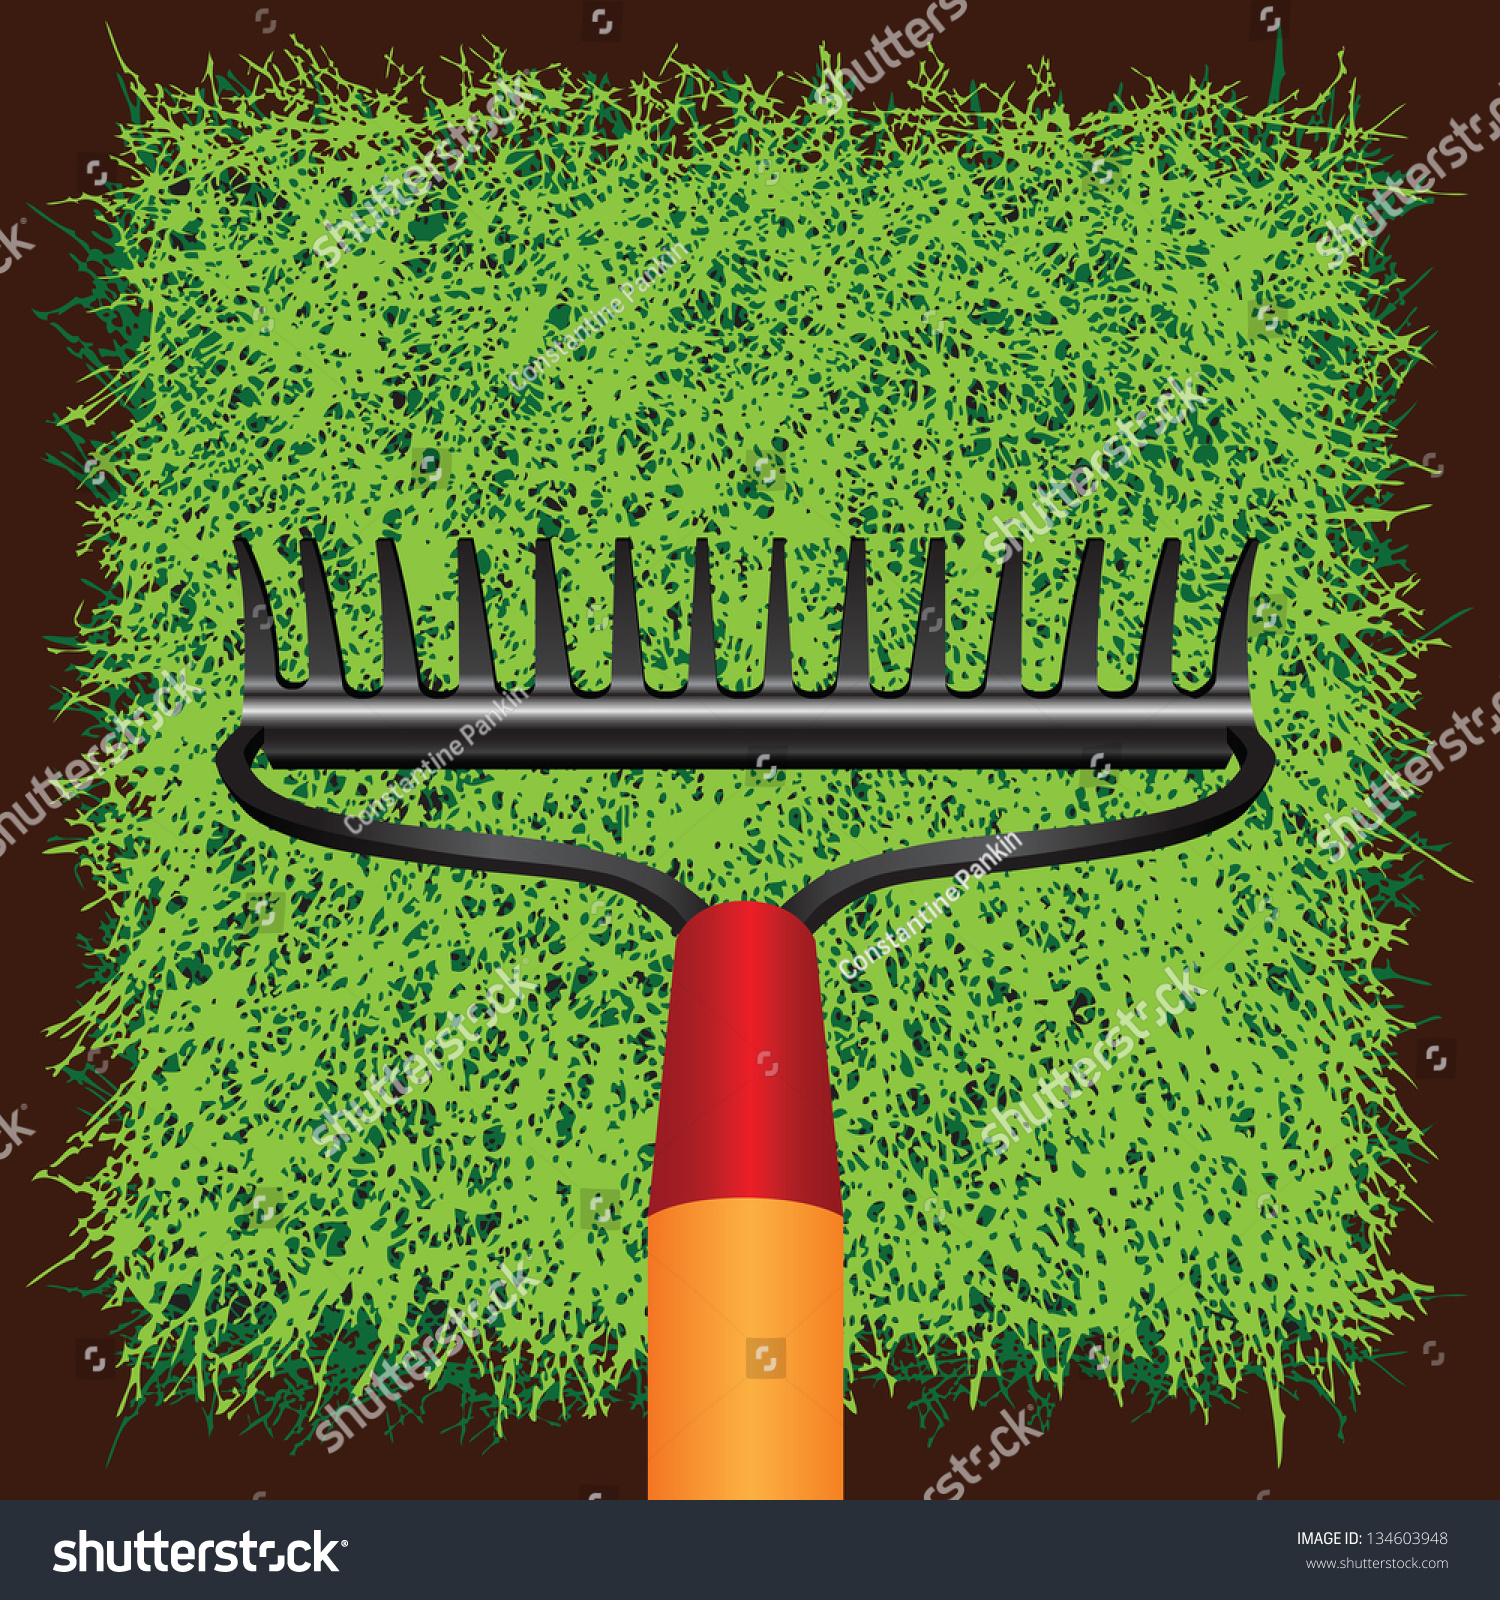 SVG of Garden rakes against the green grass turf. Vector illustration. svg